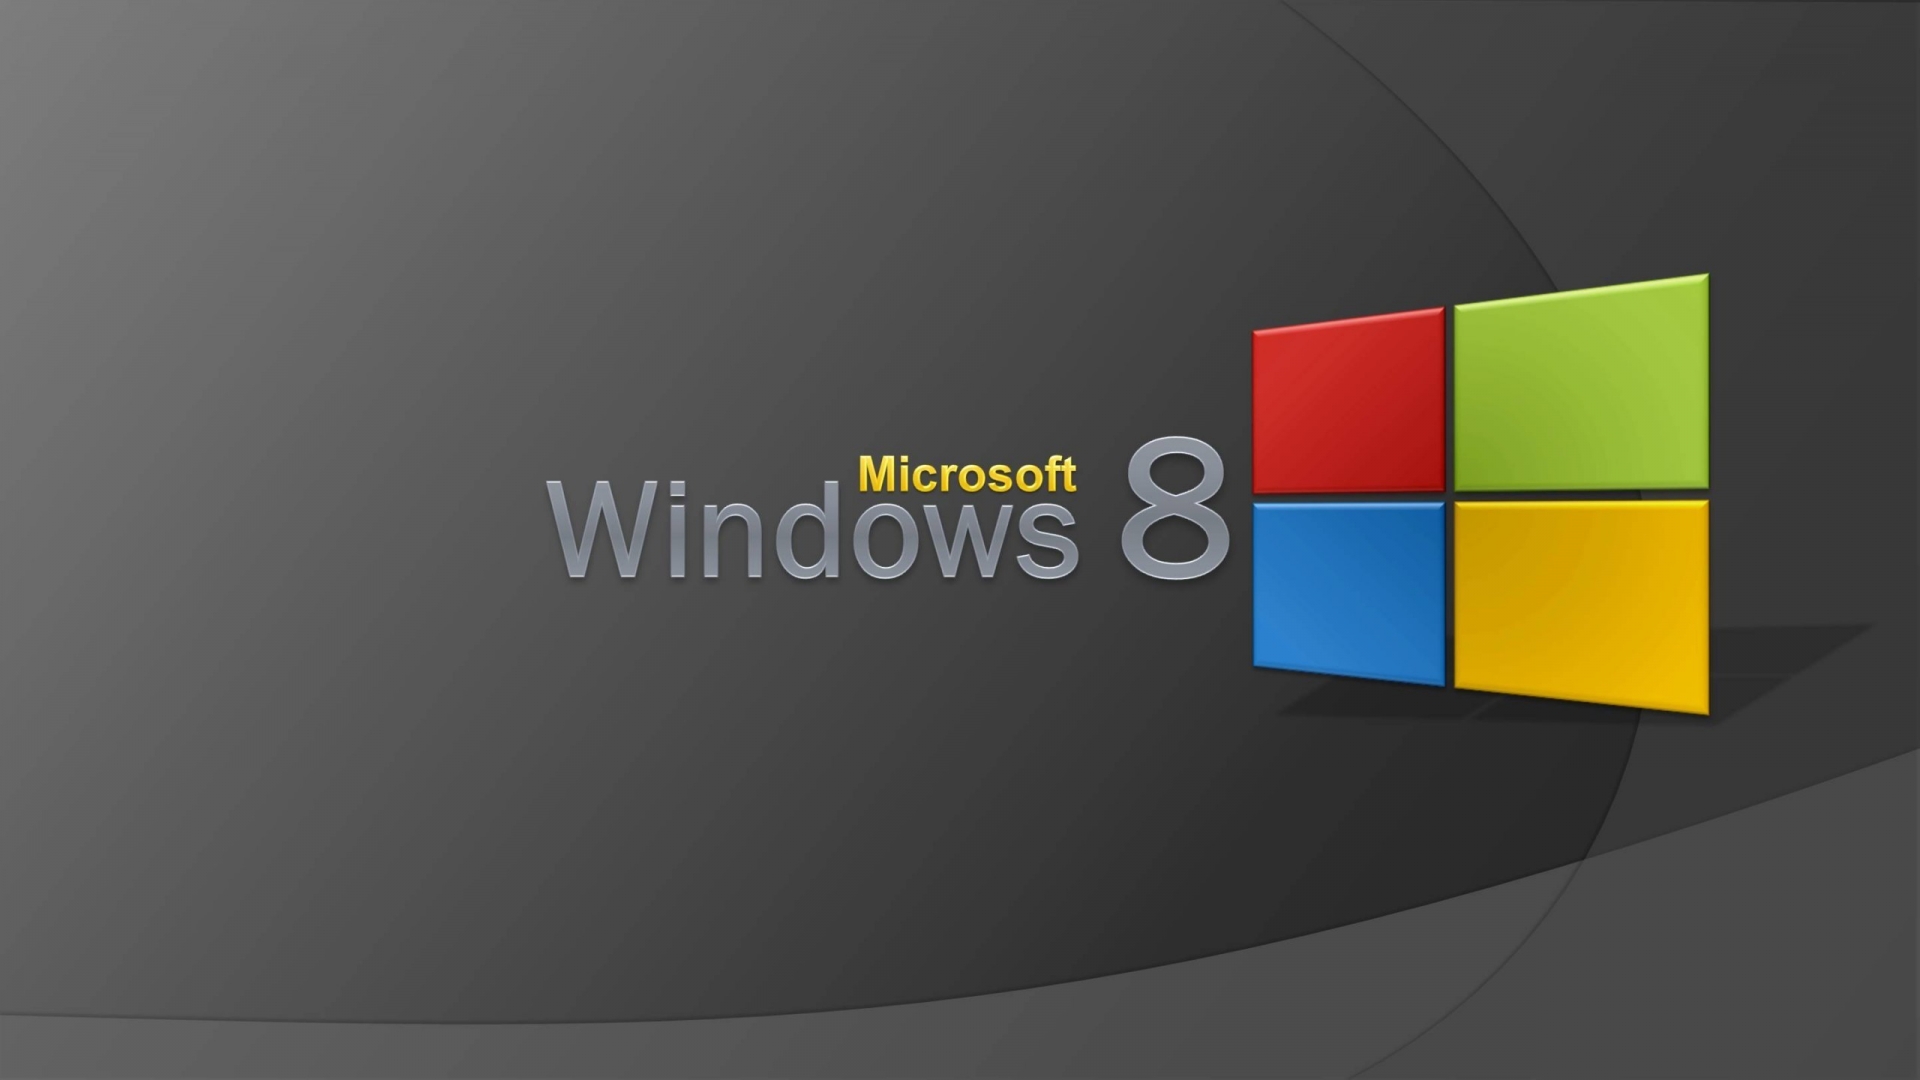 Microsoft Windows 8 for 1920 x 1080 HDTV 1080p resolution